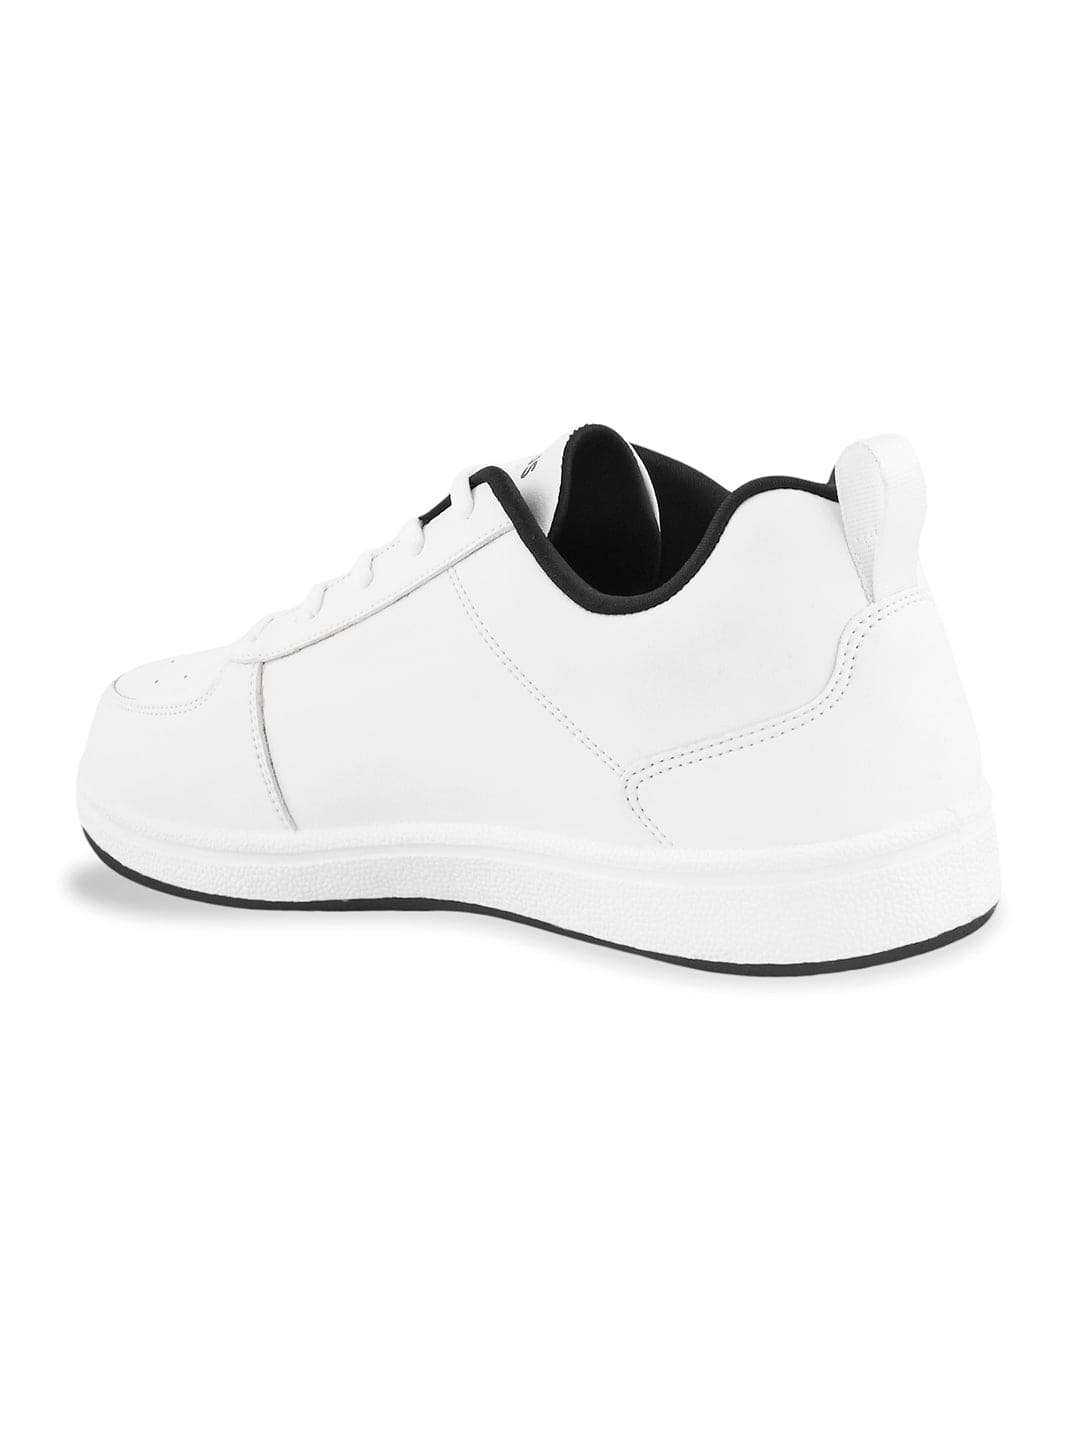 Buy Puma womens Smash Platform v2 L Puma White-Puma Black Sneaker - 7 UK  (37303502) at Amazon.in